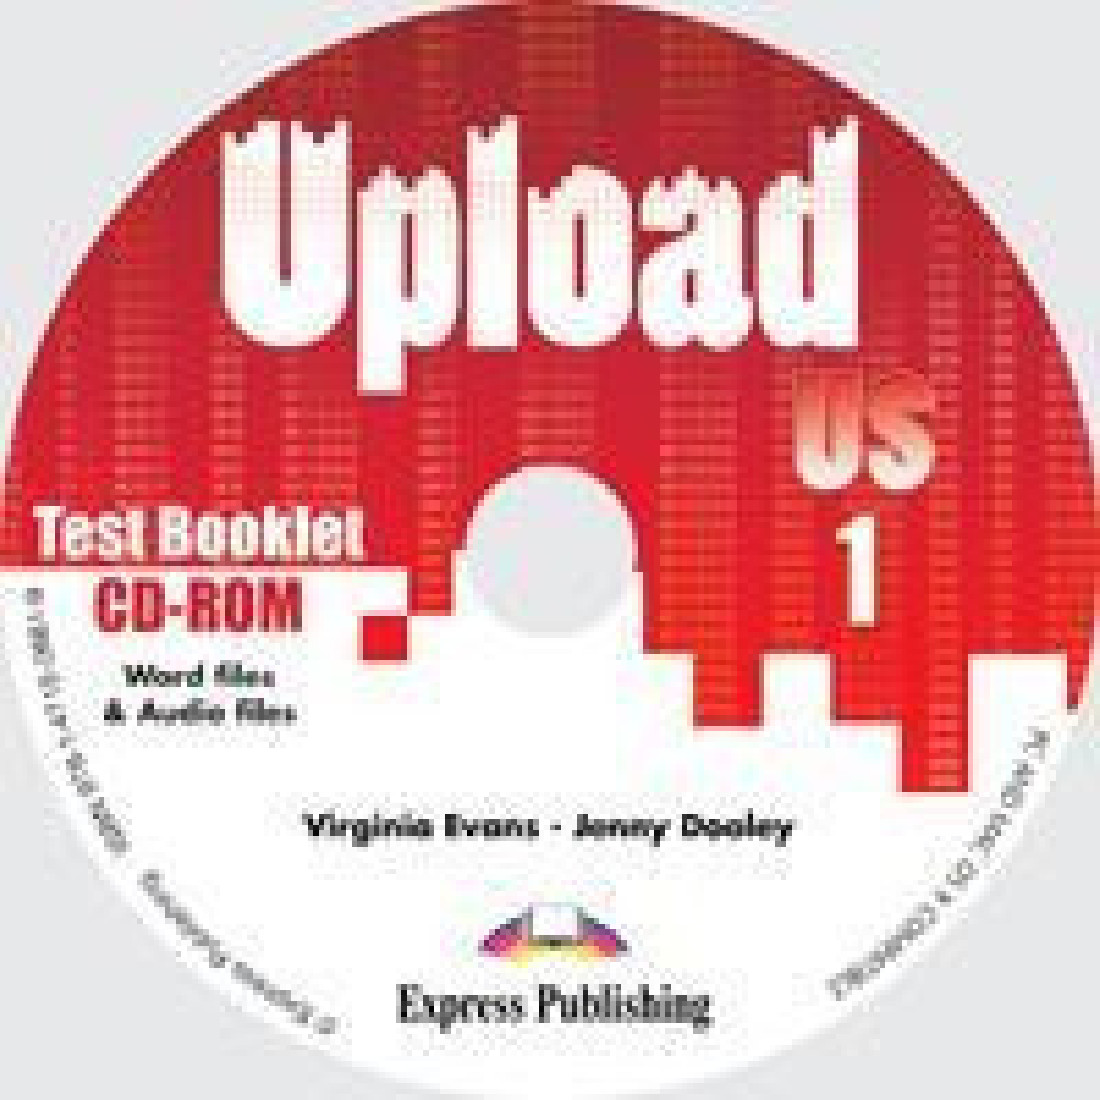 UPLOAD US 1 TEST BOOK CD-ROM